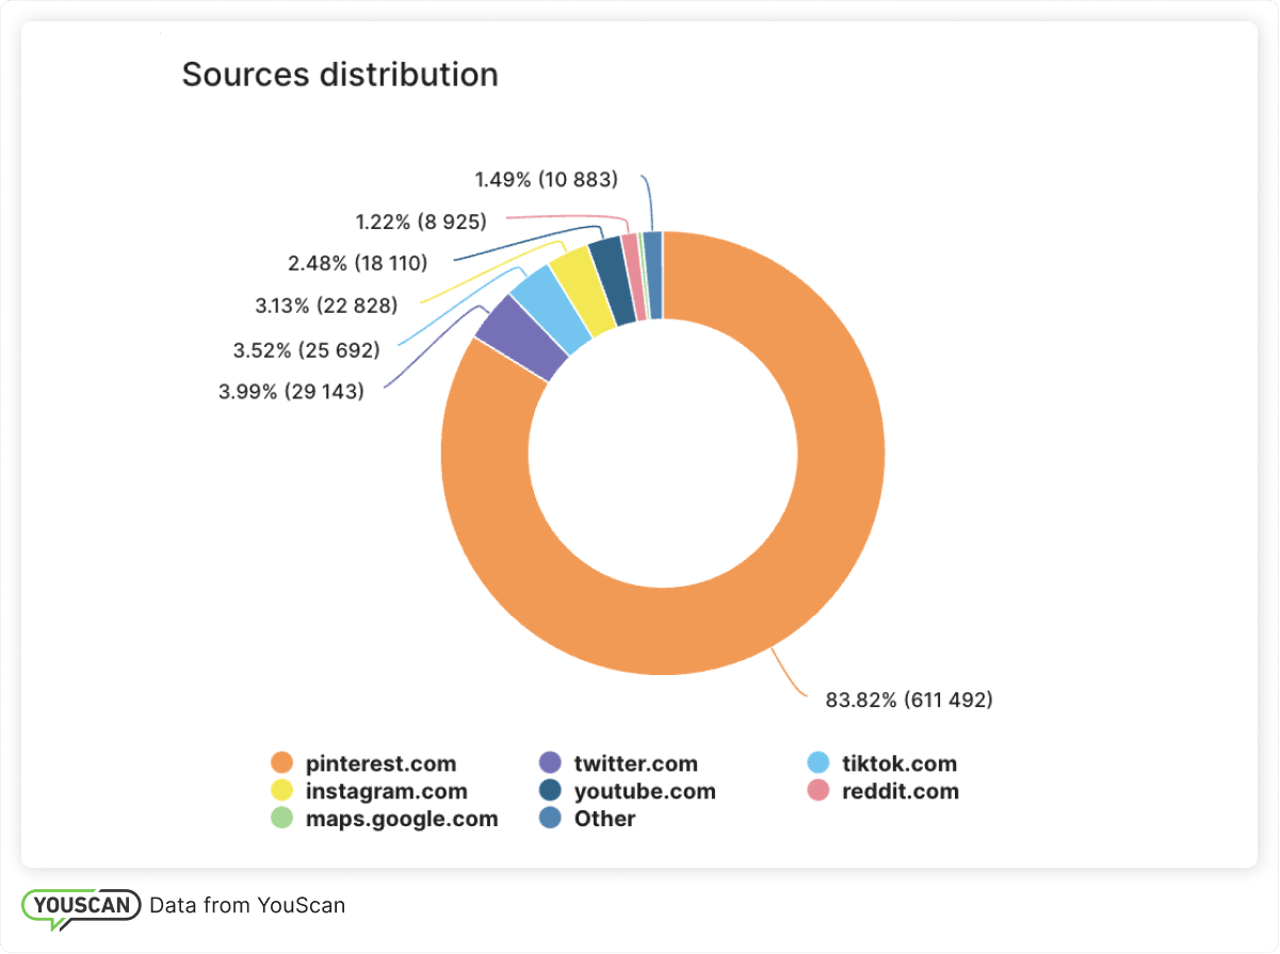 Sources distribution for Sephora brand